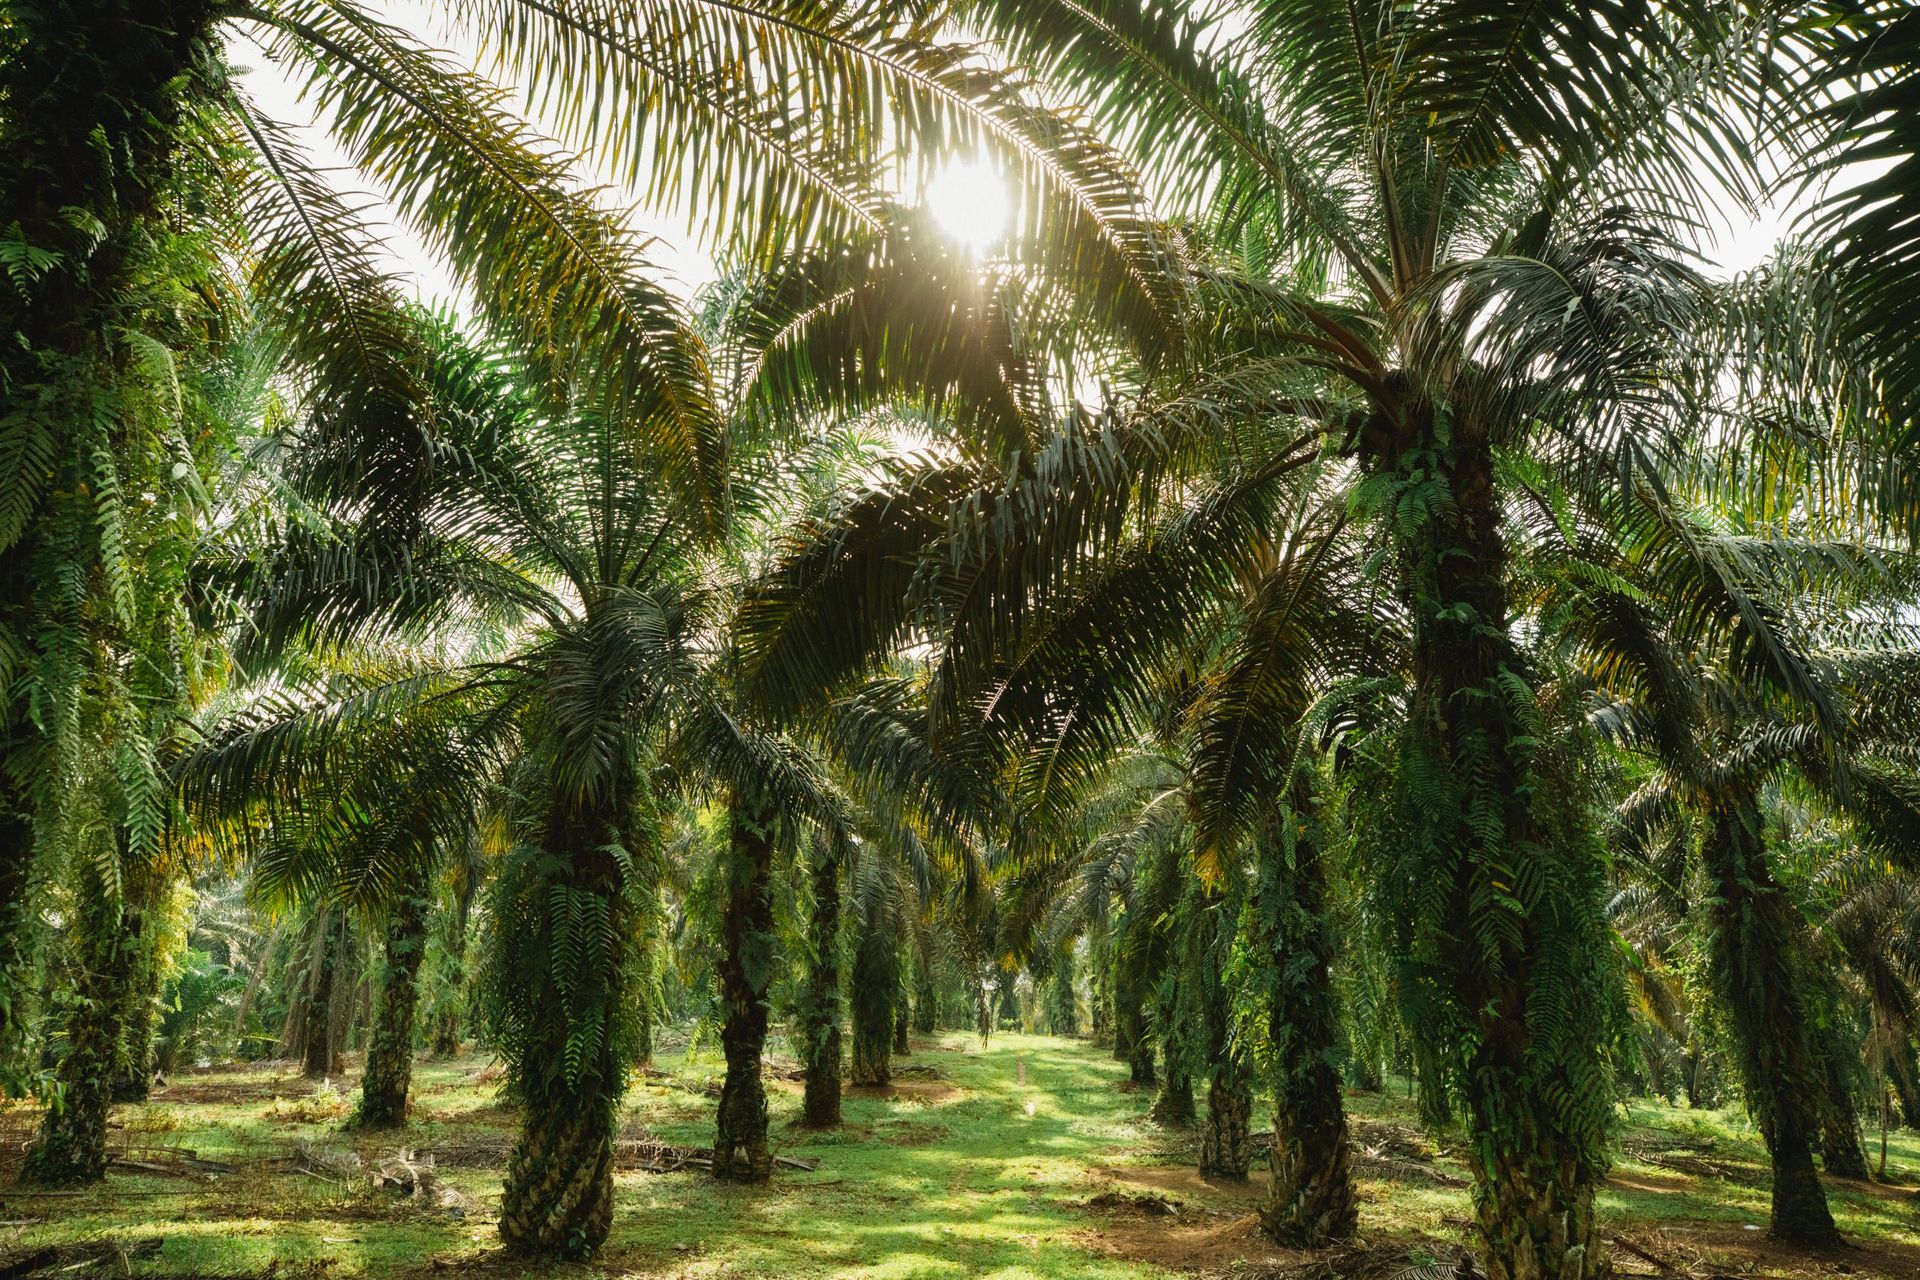 Musim-Mas-palm-oil-plantation-scaled